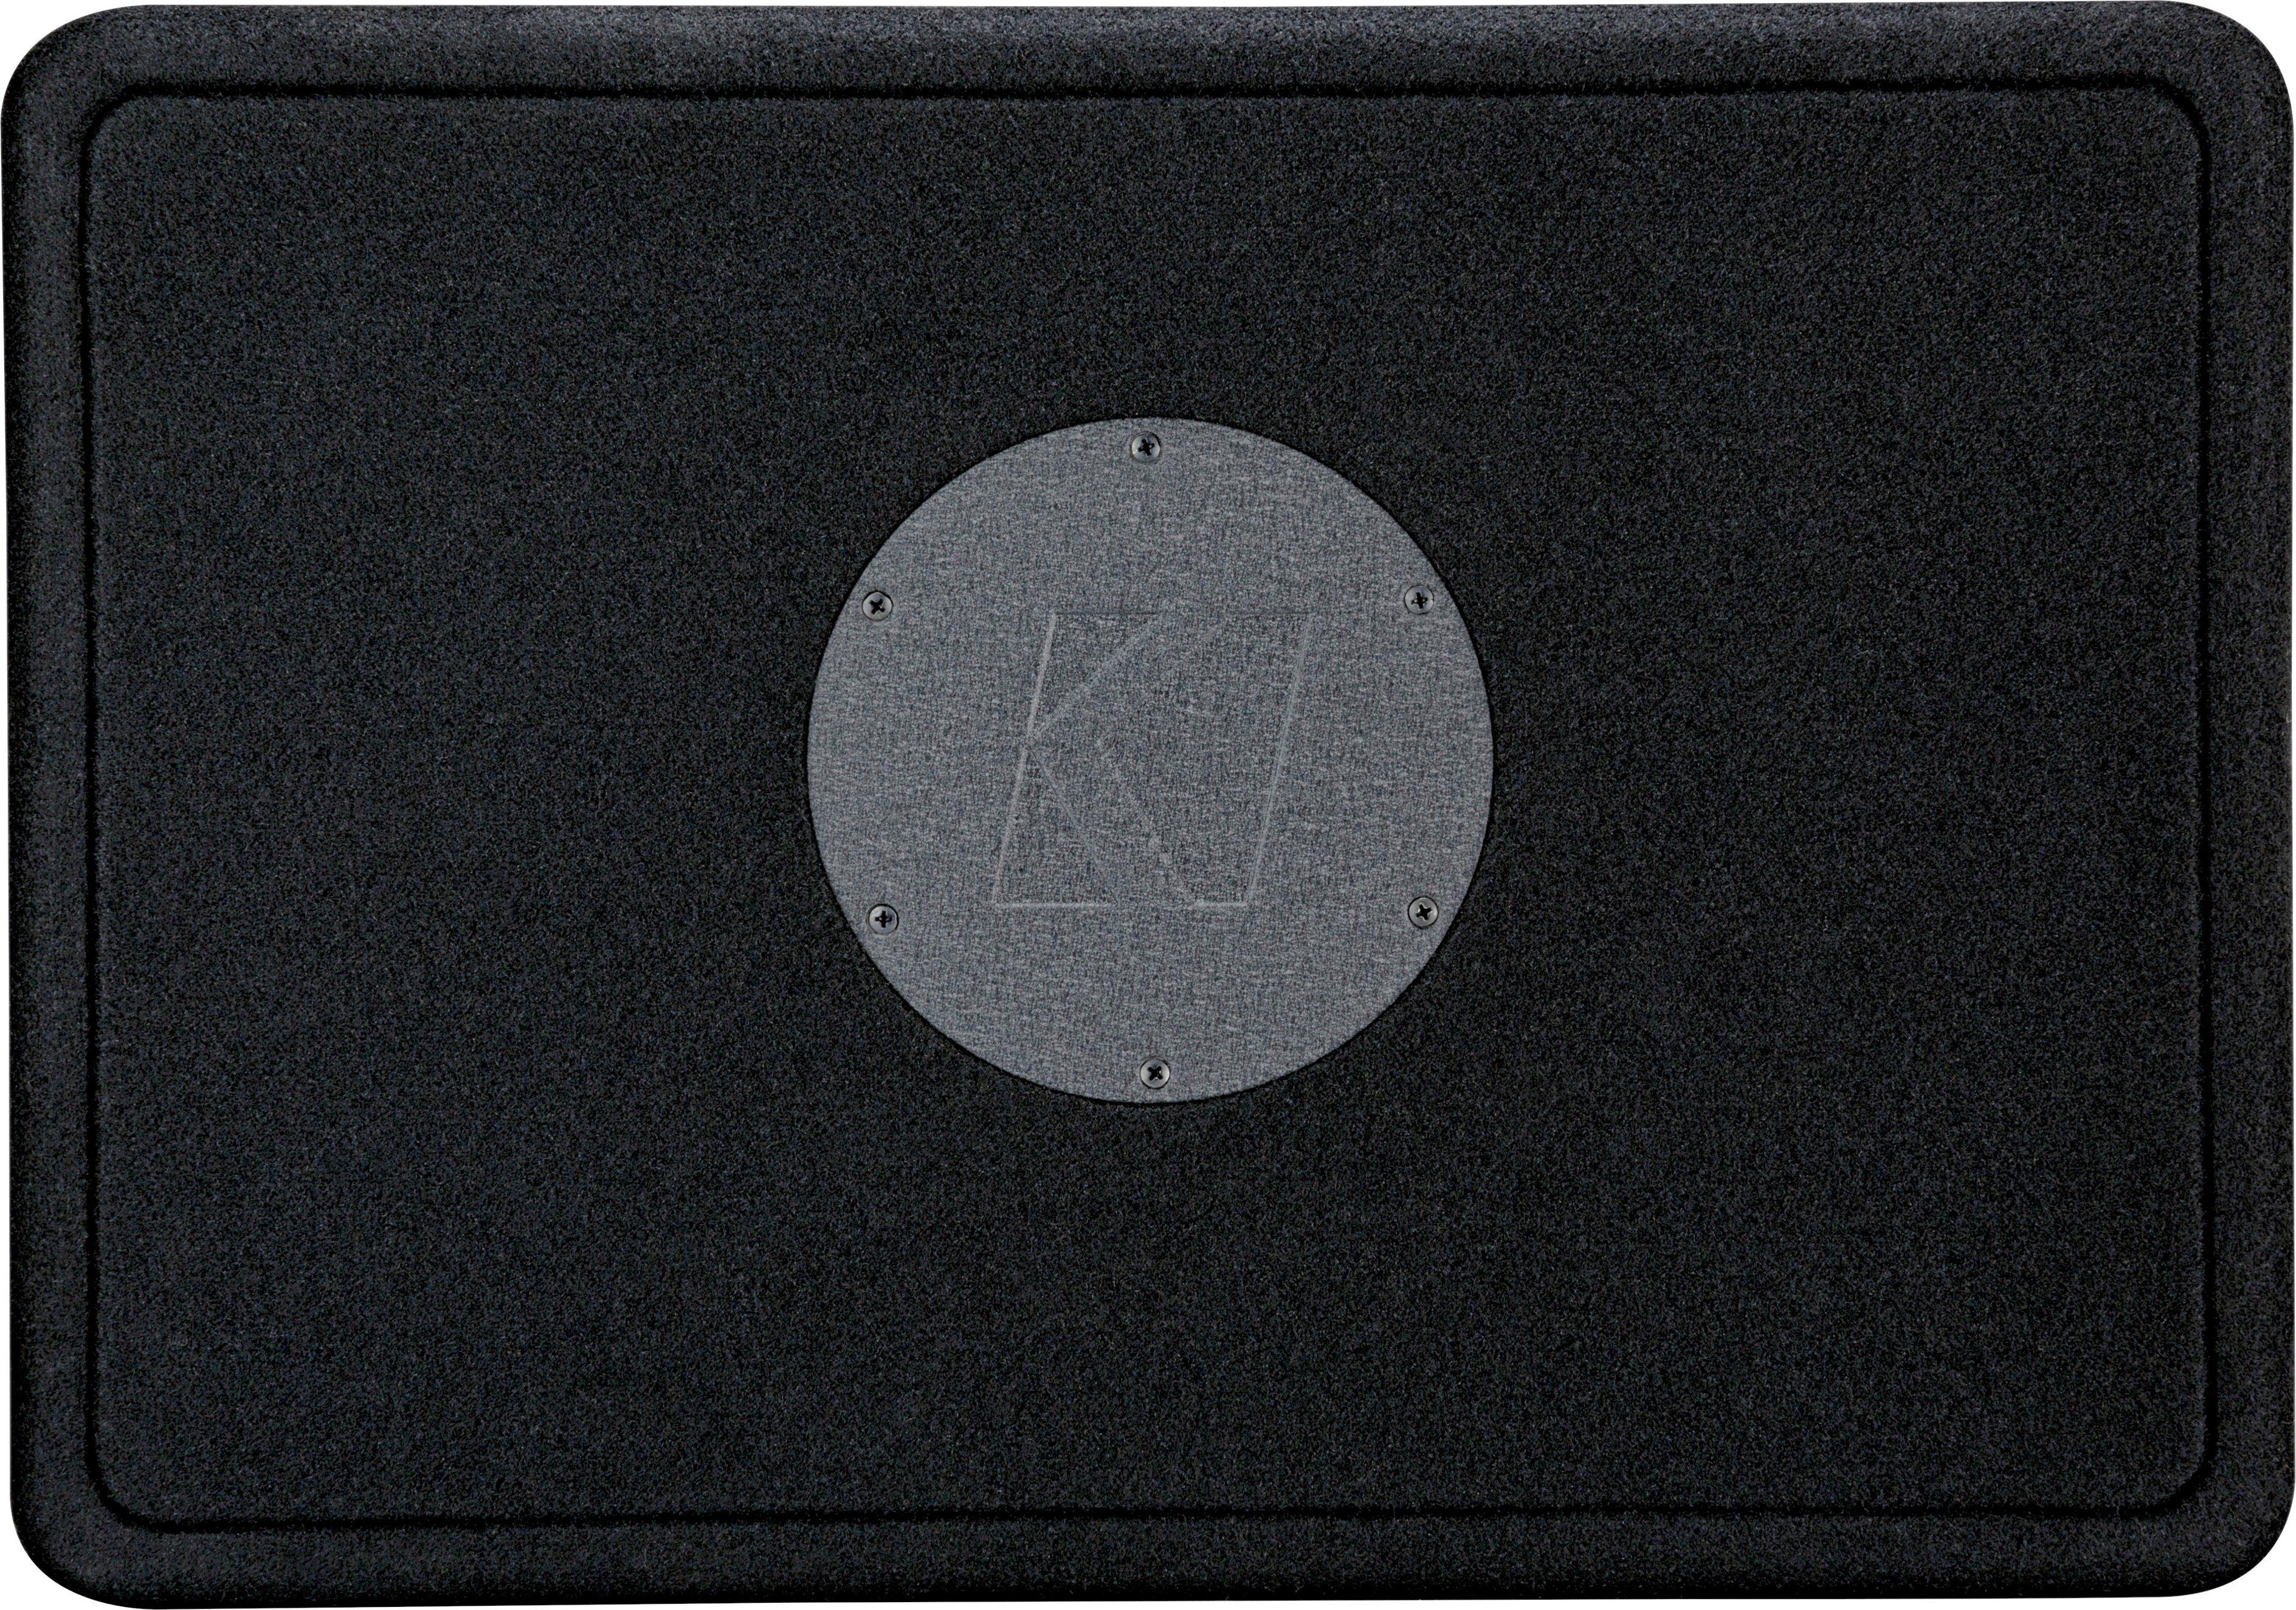 Back View: KICKER - KS Series 6" x 8" 2-Way Car Speaker with Polypropylene Cones (Each) - Black